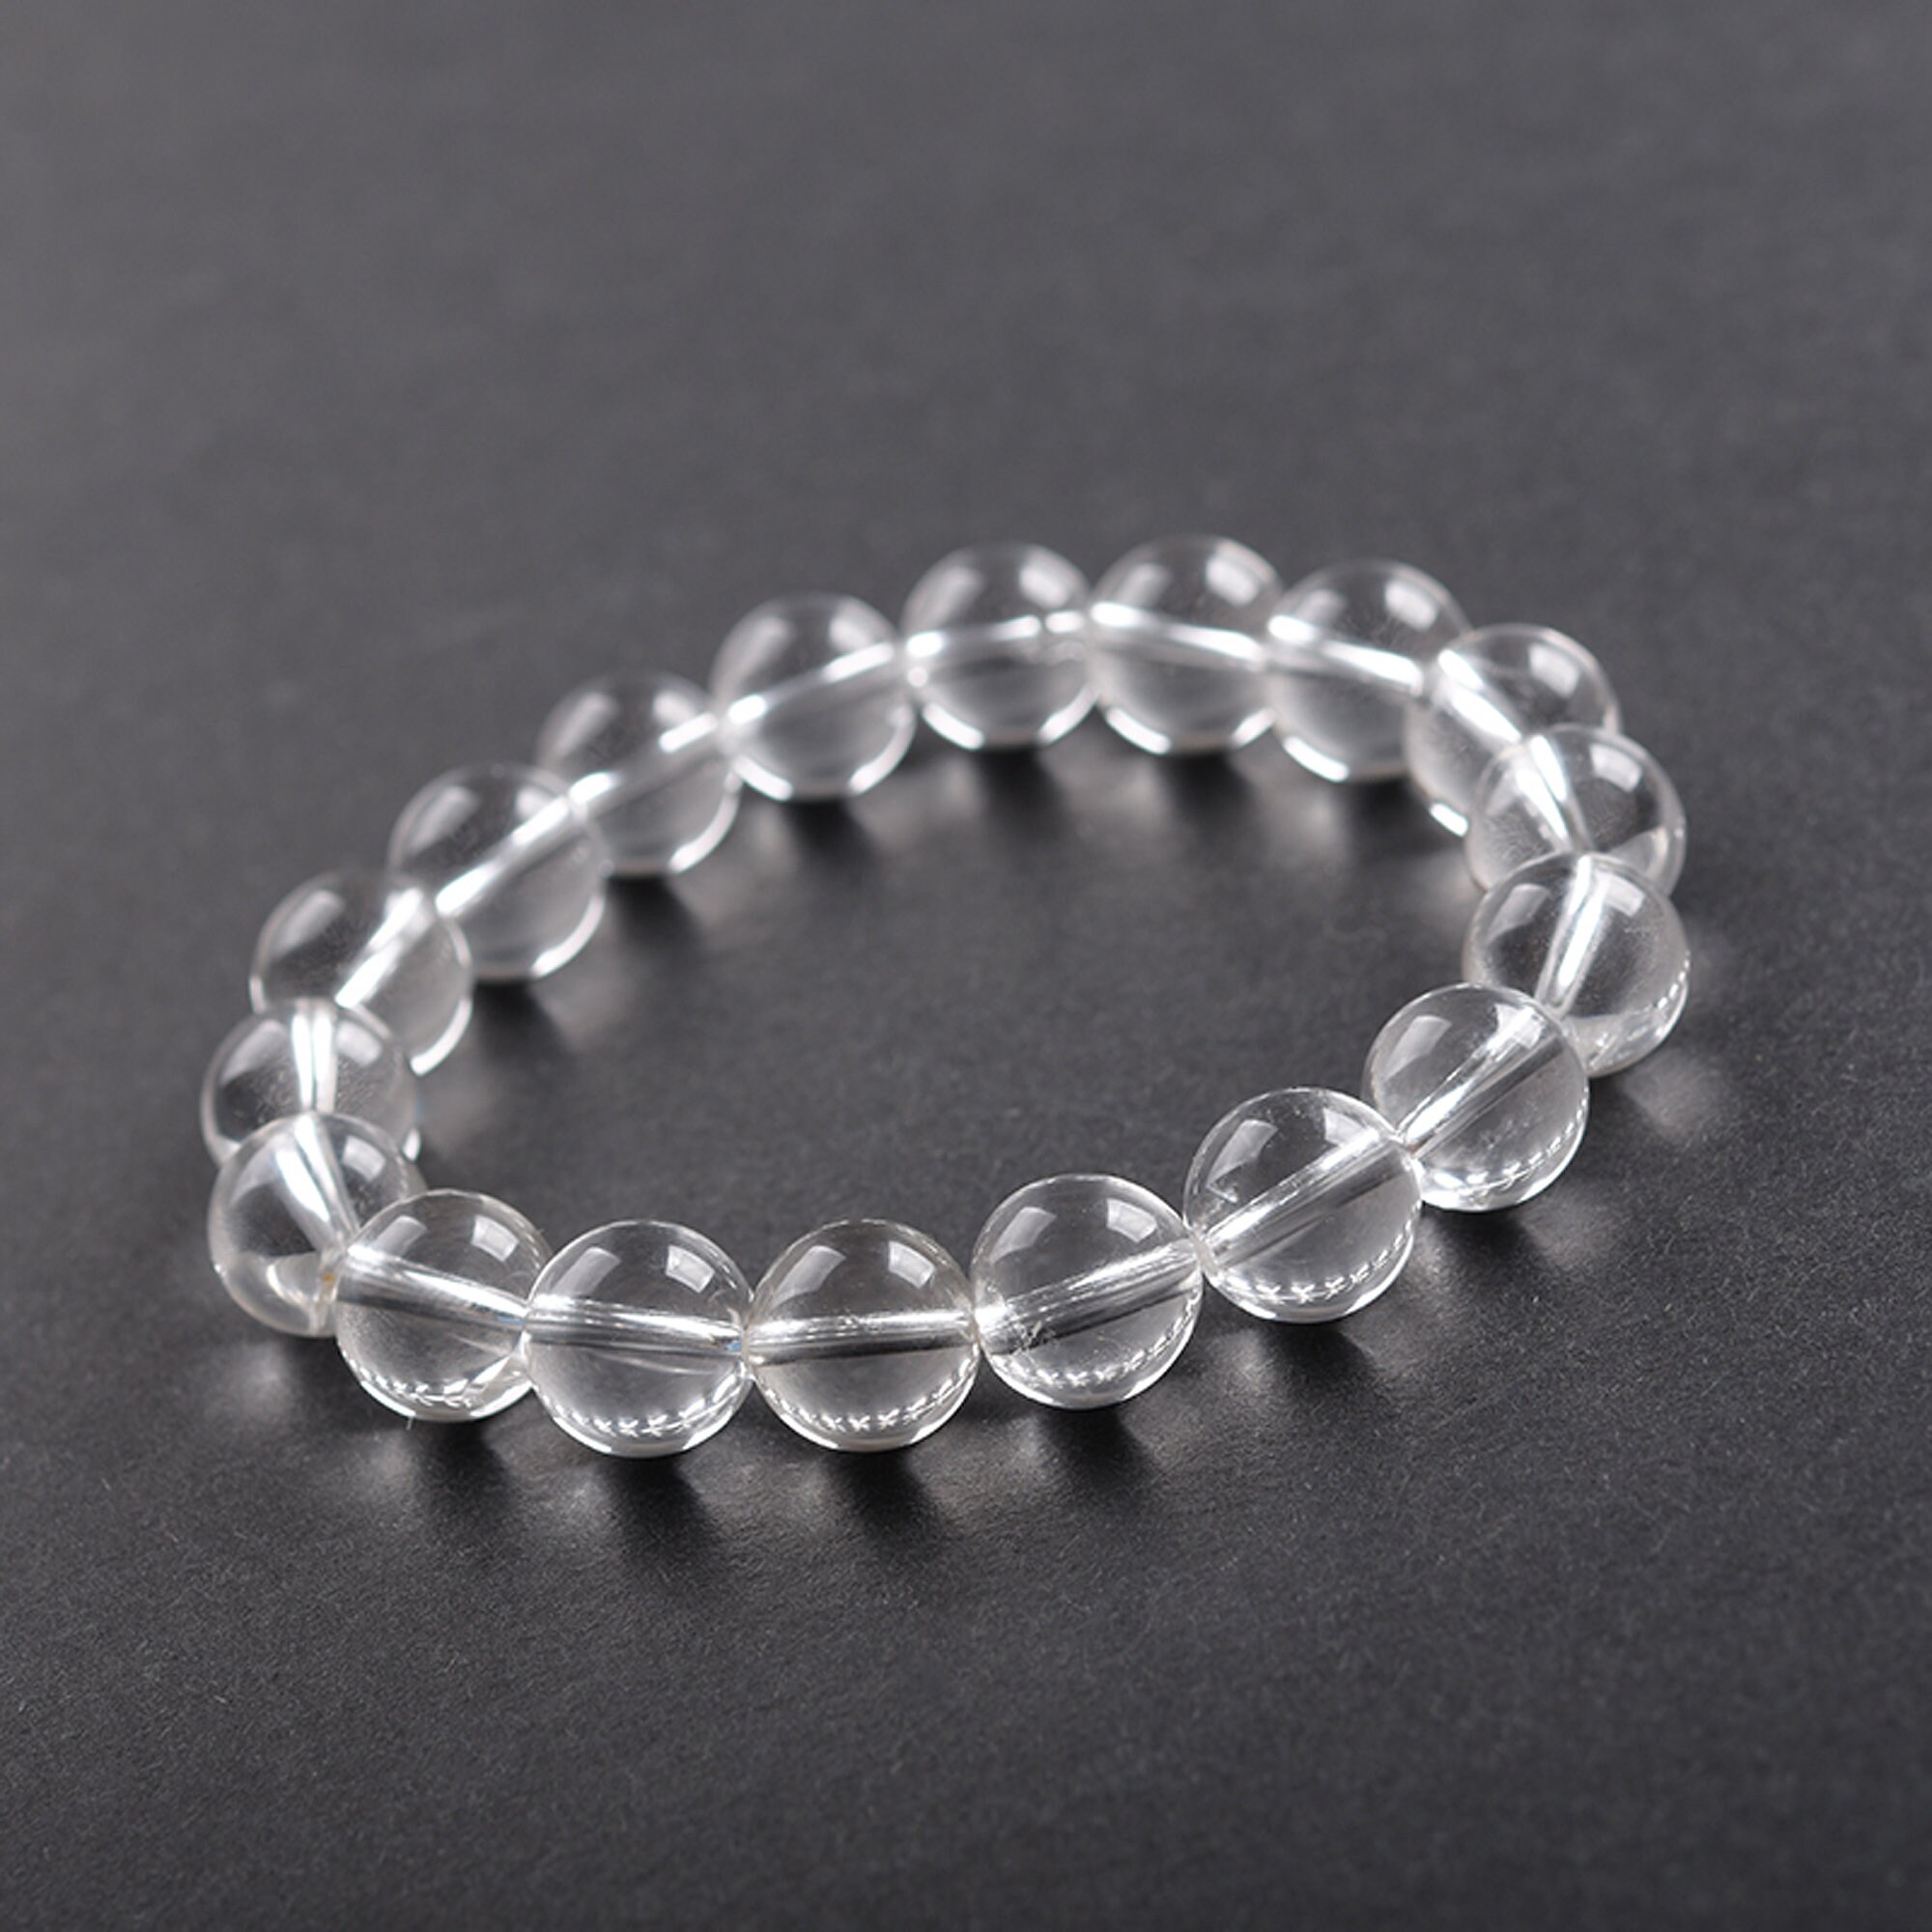 Clear crystal quartz gemstone bracelet,crystal healing beaded stretch bracelet gift for women men unisex Boho Yoga Jewelry 6mm 8mm 10mm 12mm